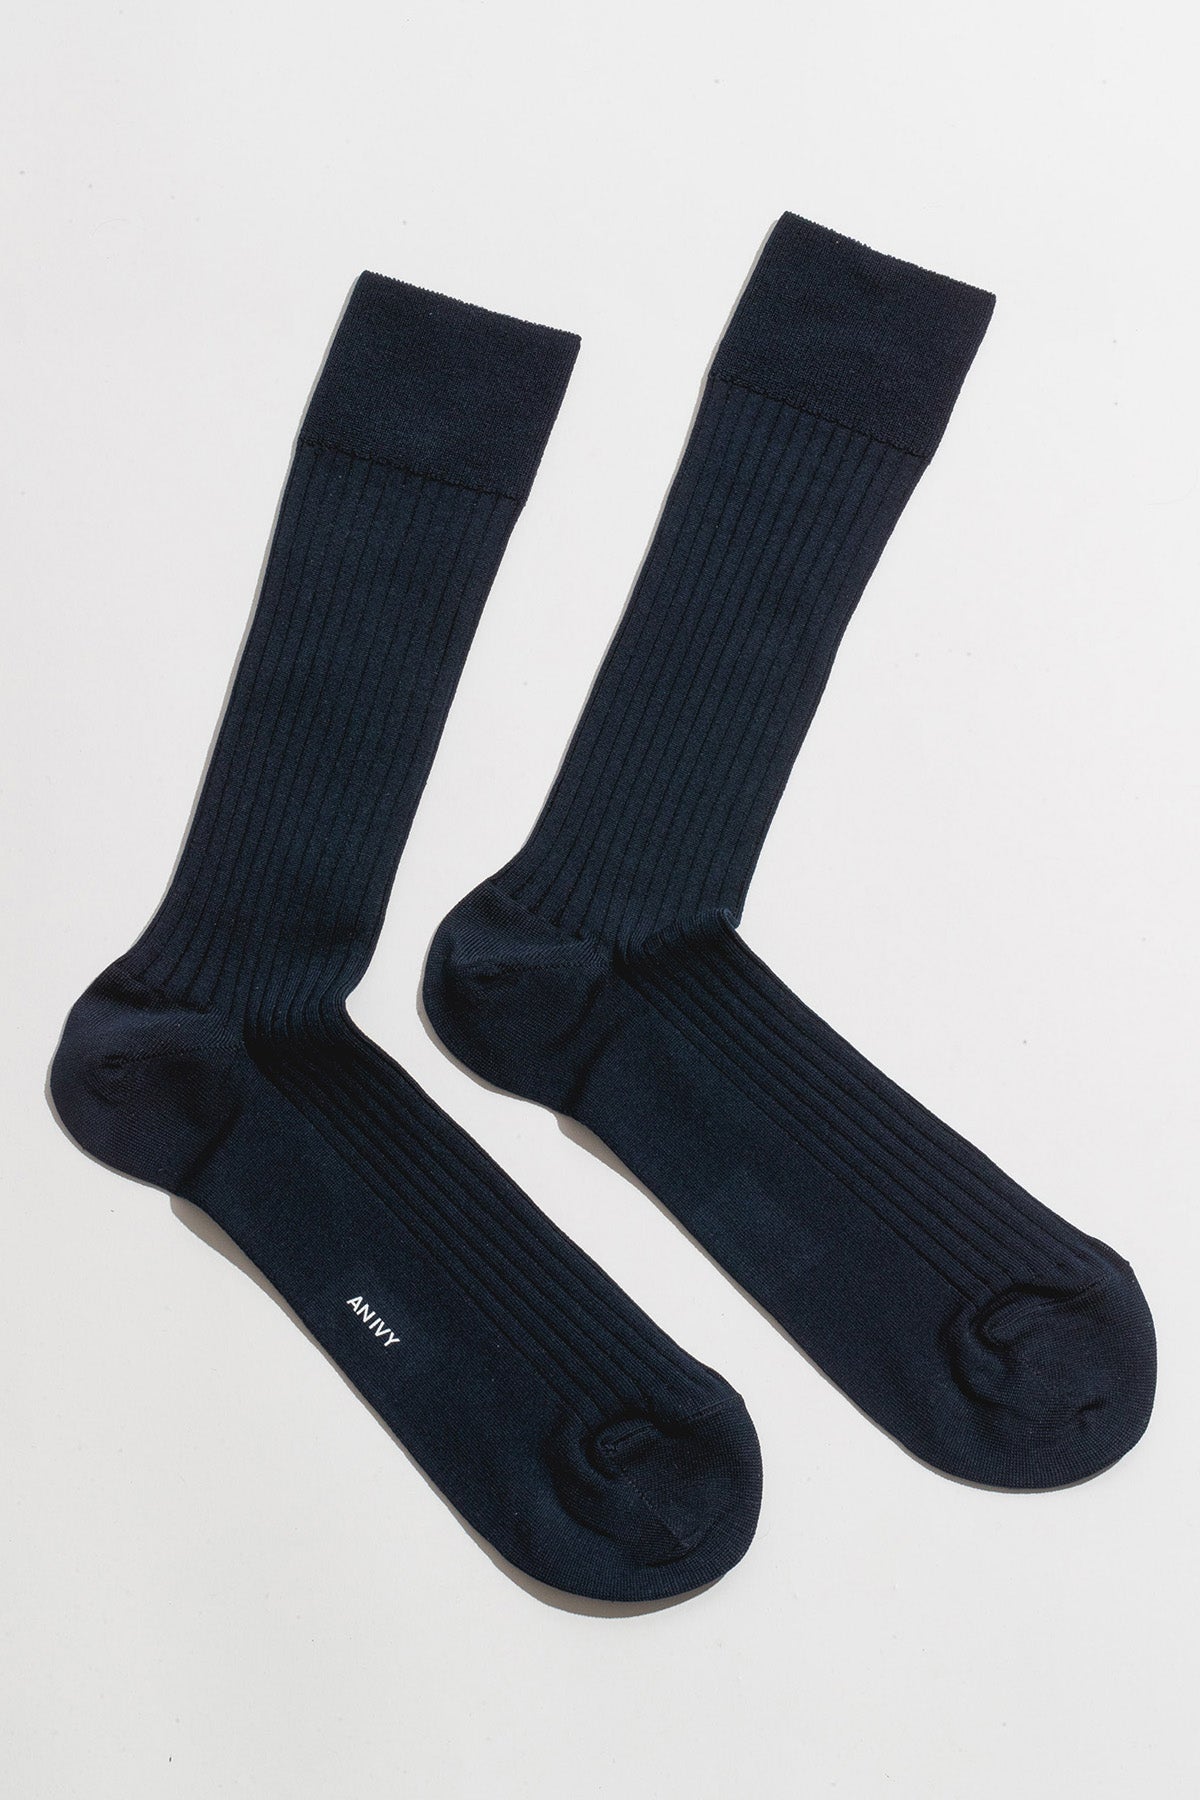 AN IVY Sokker Navy Ribbed Socks